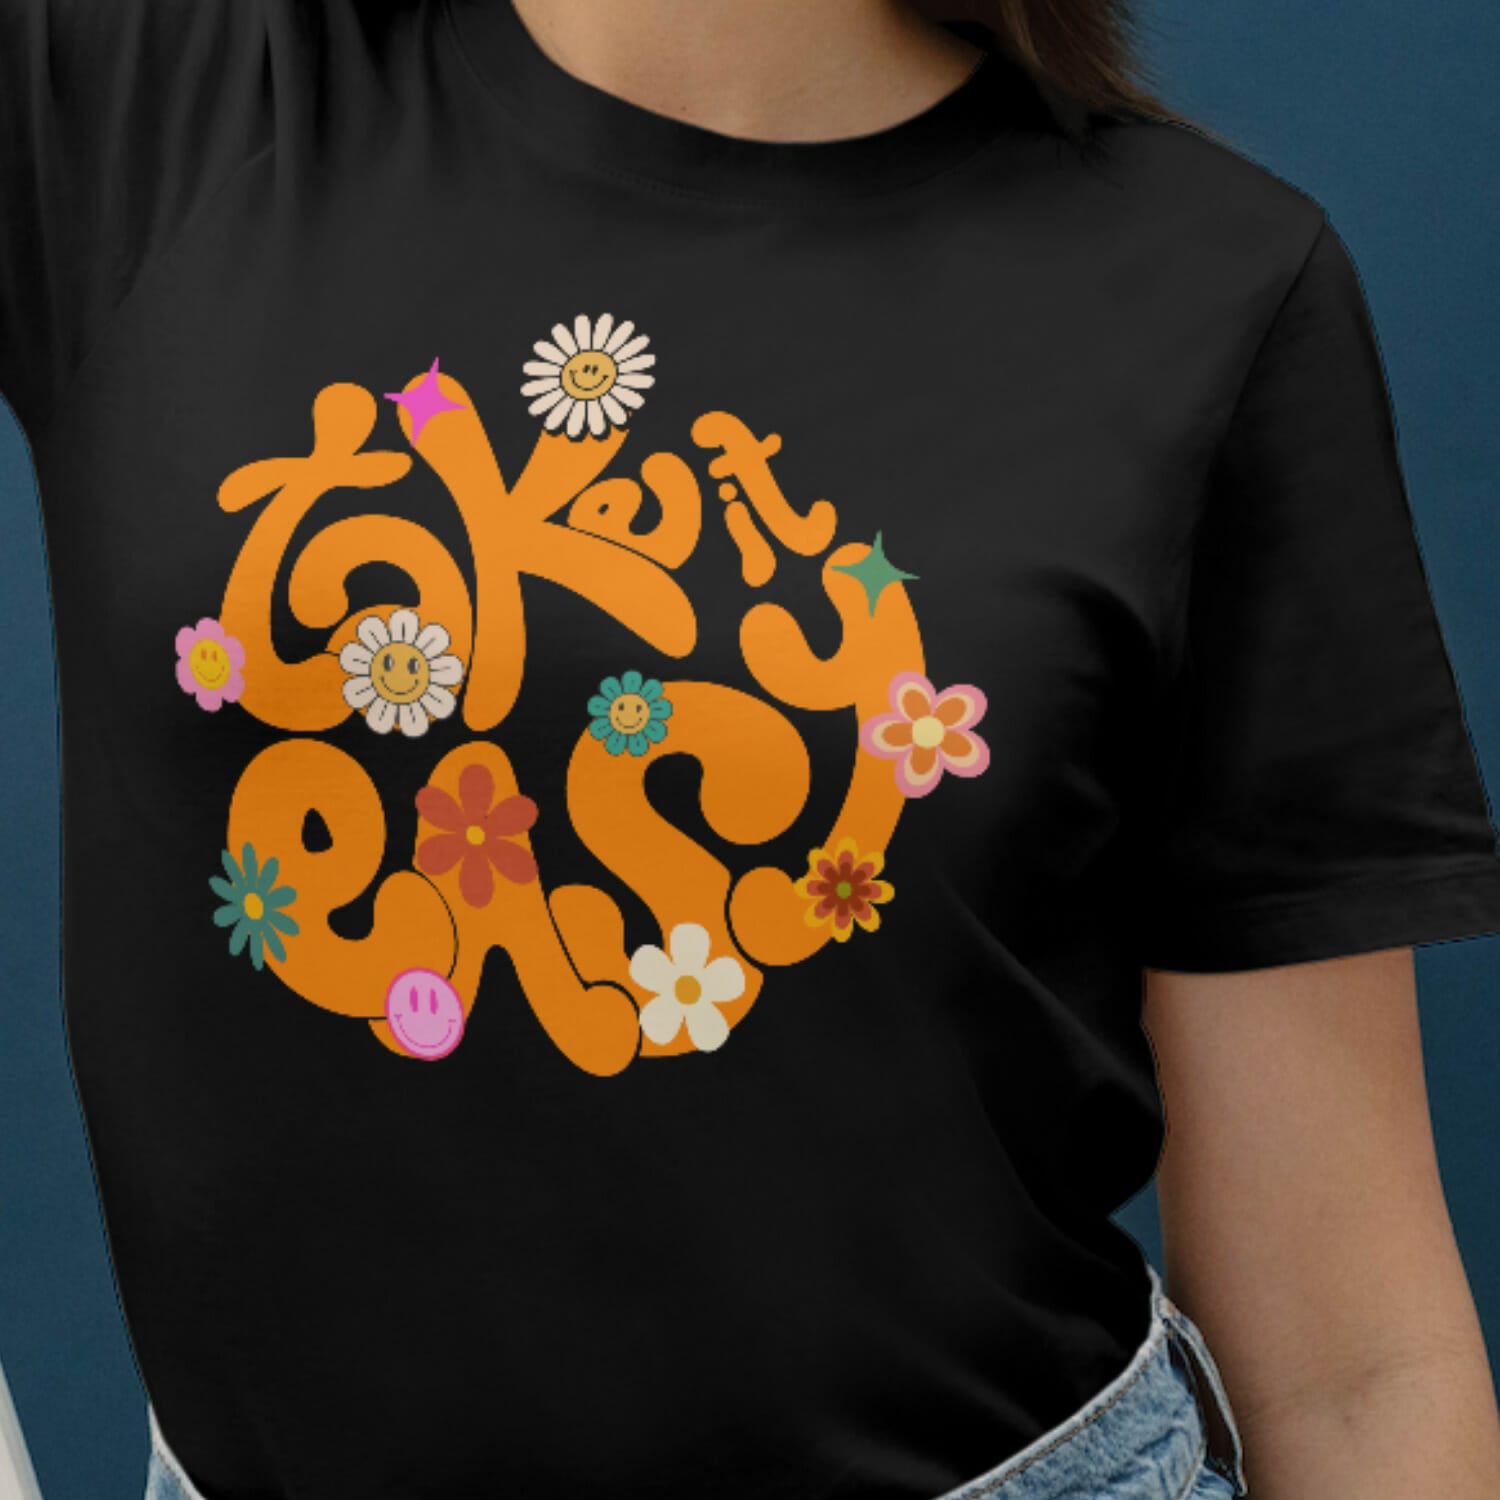 Take it easy Groovy T shirt design For Girls - Free Design